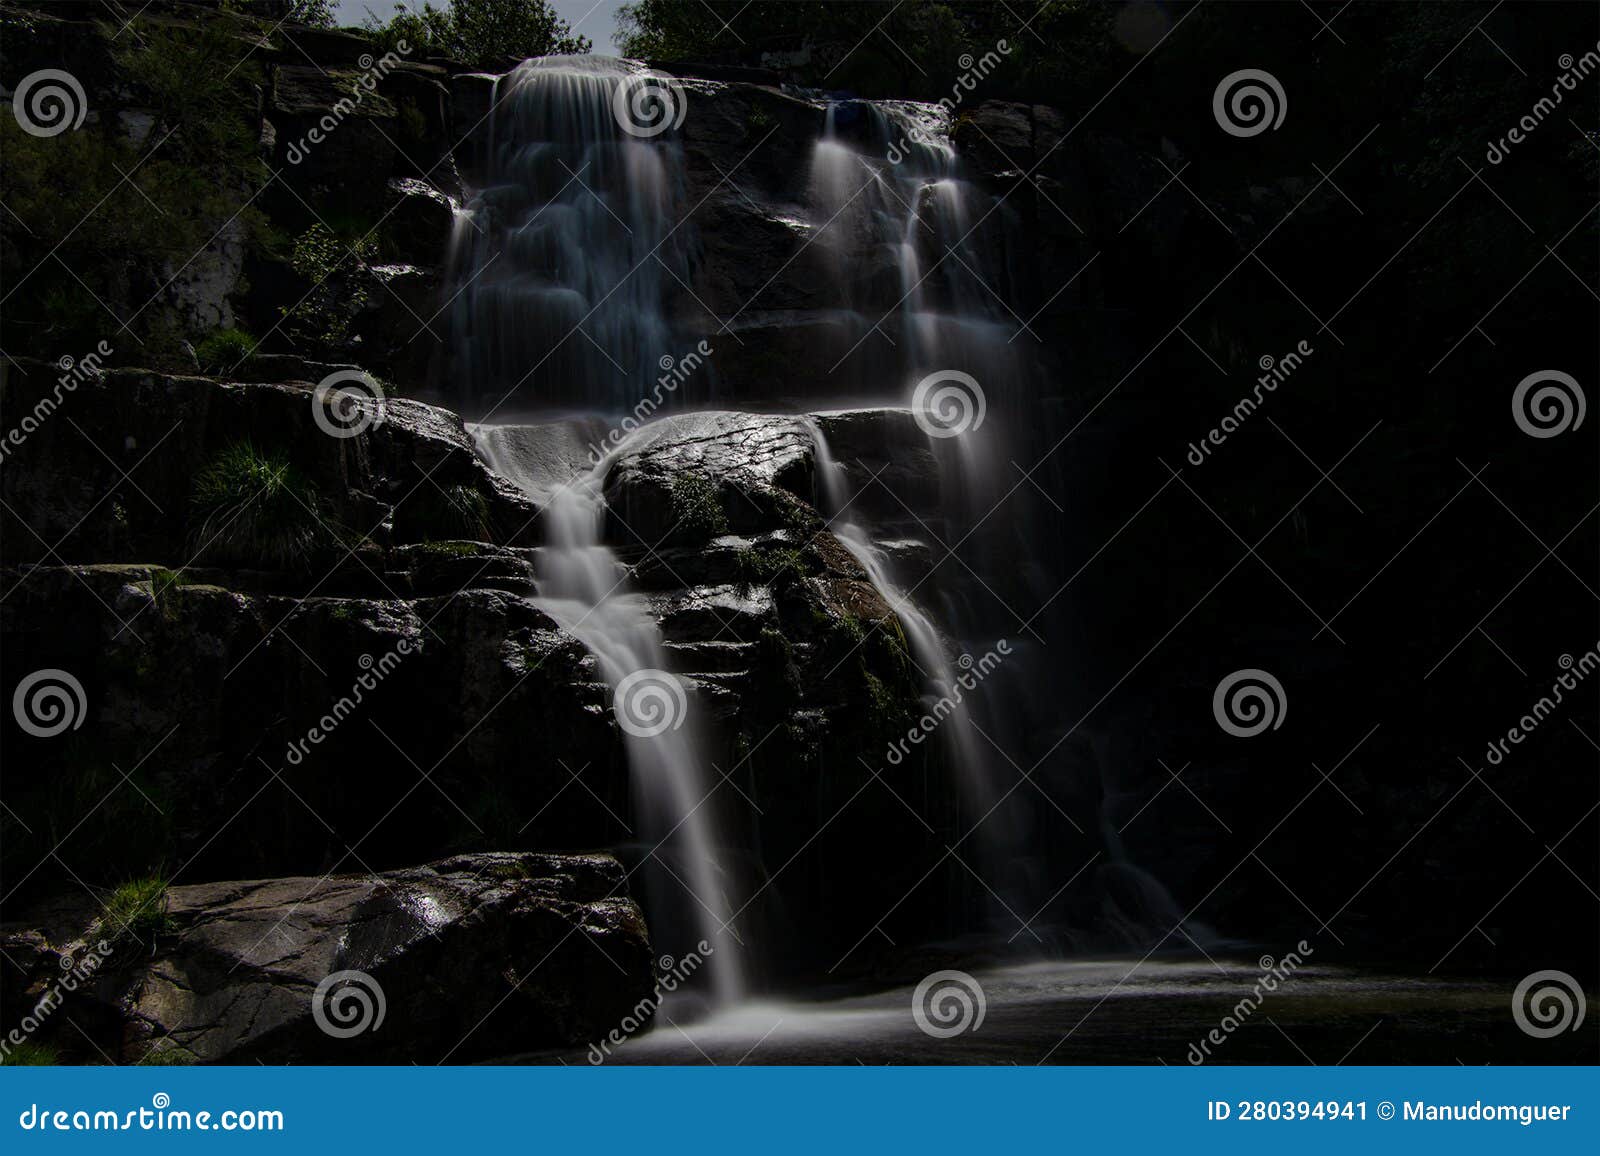 waterfall in the rain forest. tree fern waterfall tropical rain forest paradise. fervenza de casariÃ±os.fervenza da freixa. night